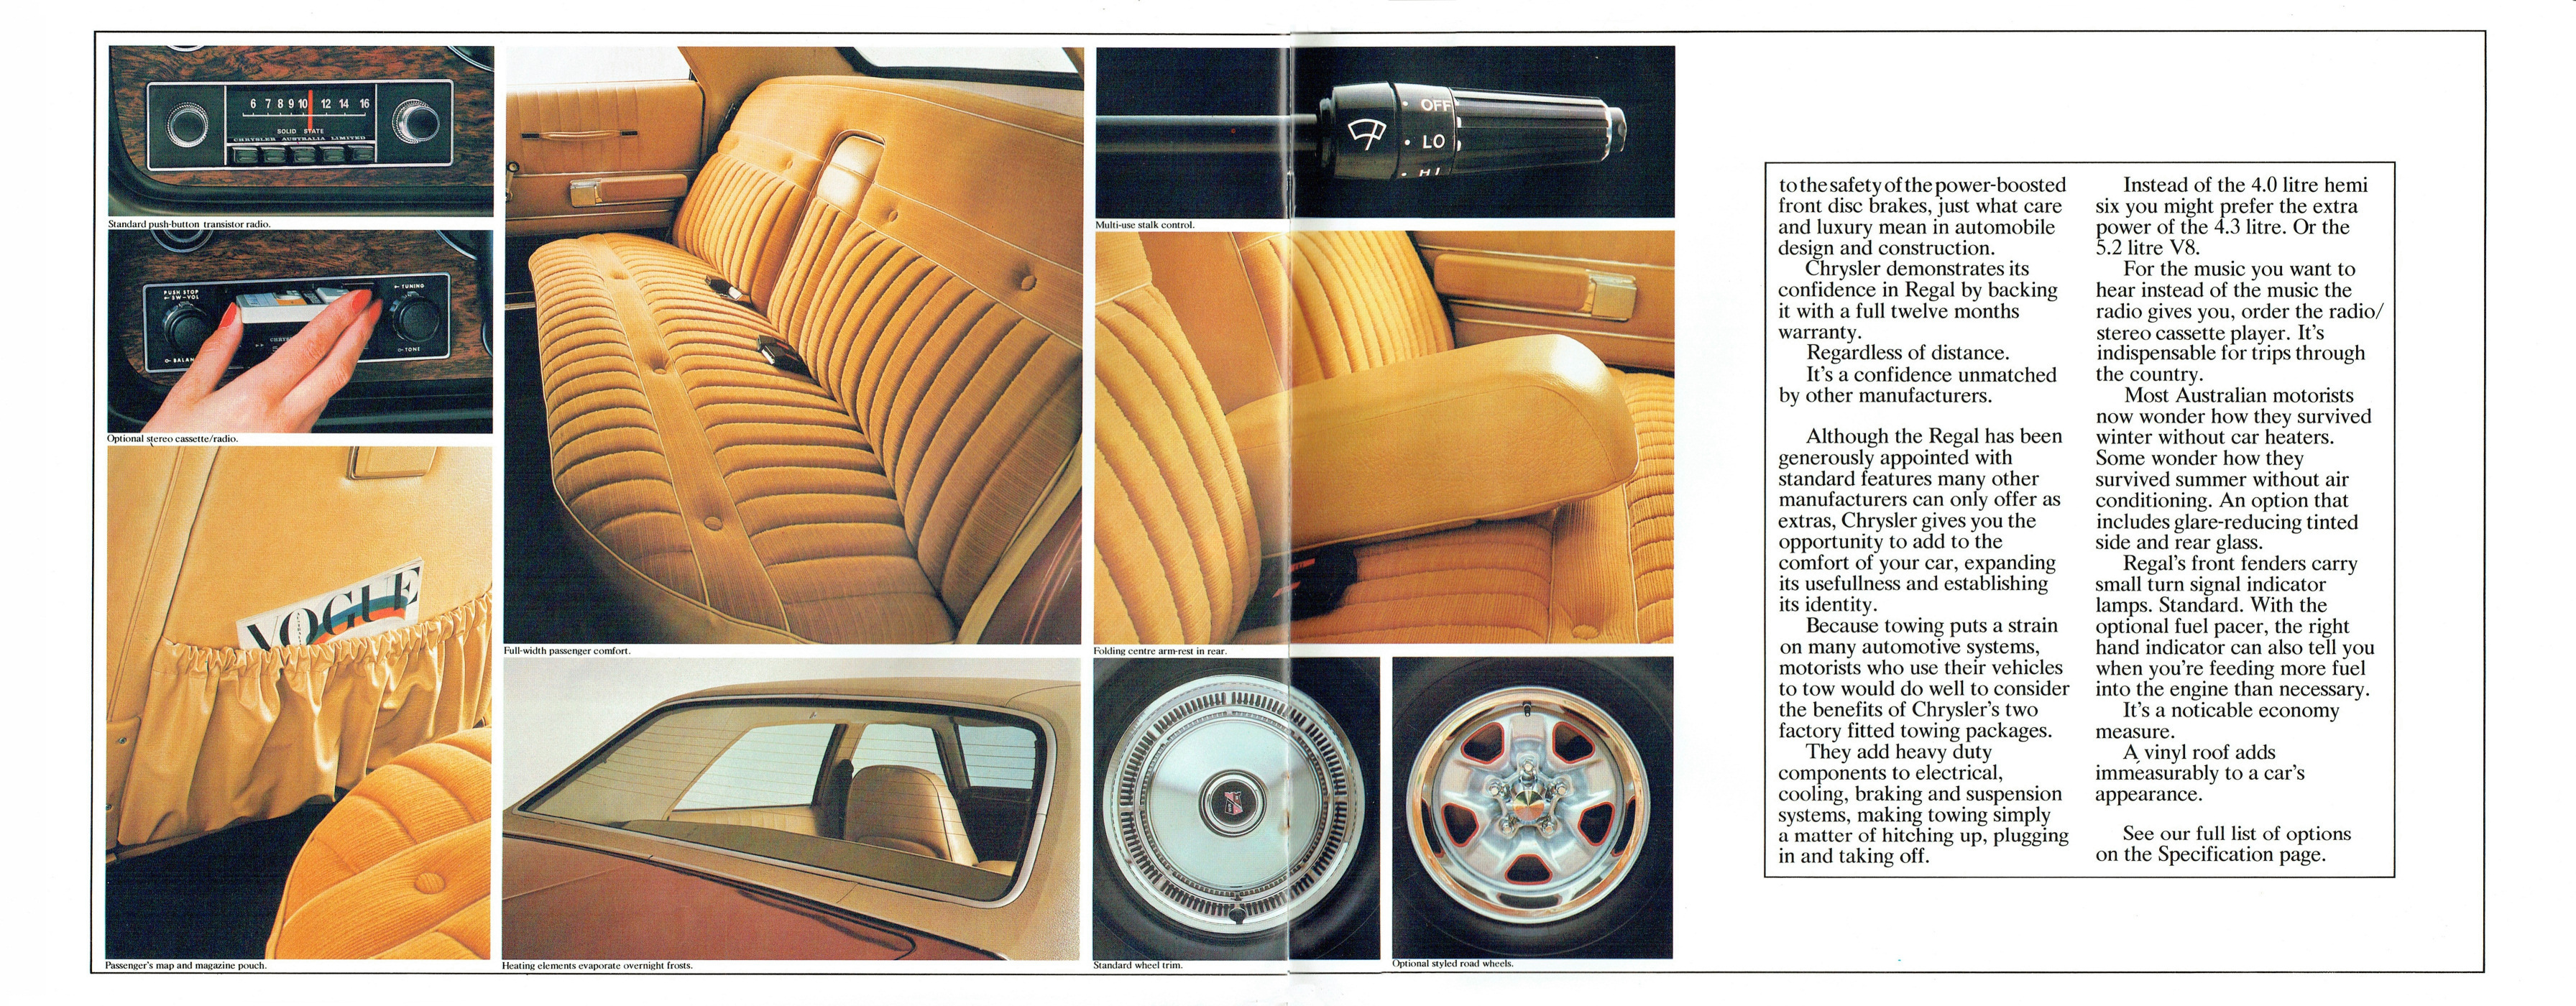 1976_Chrysler_CL_Regal-06-07